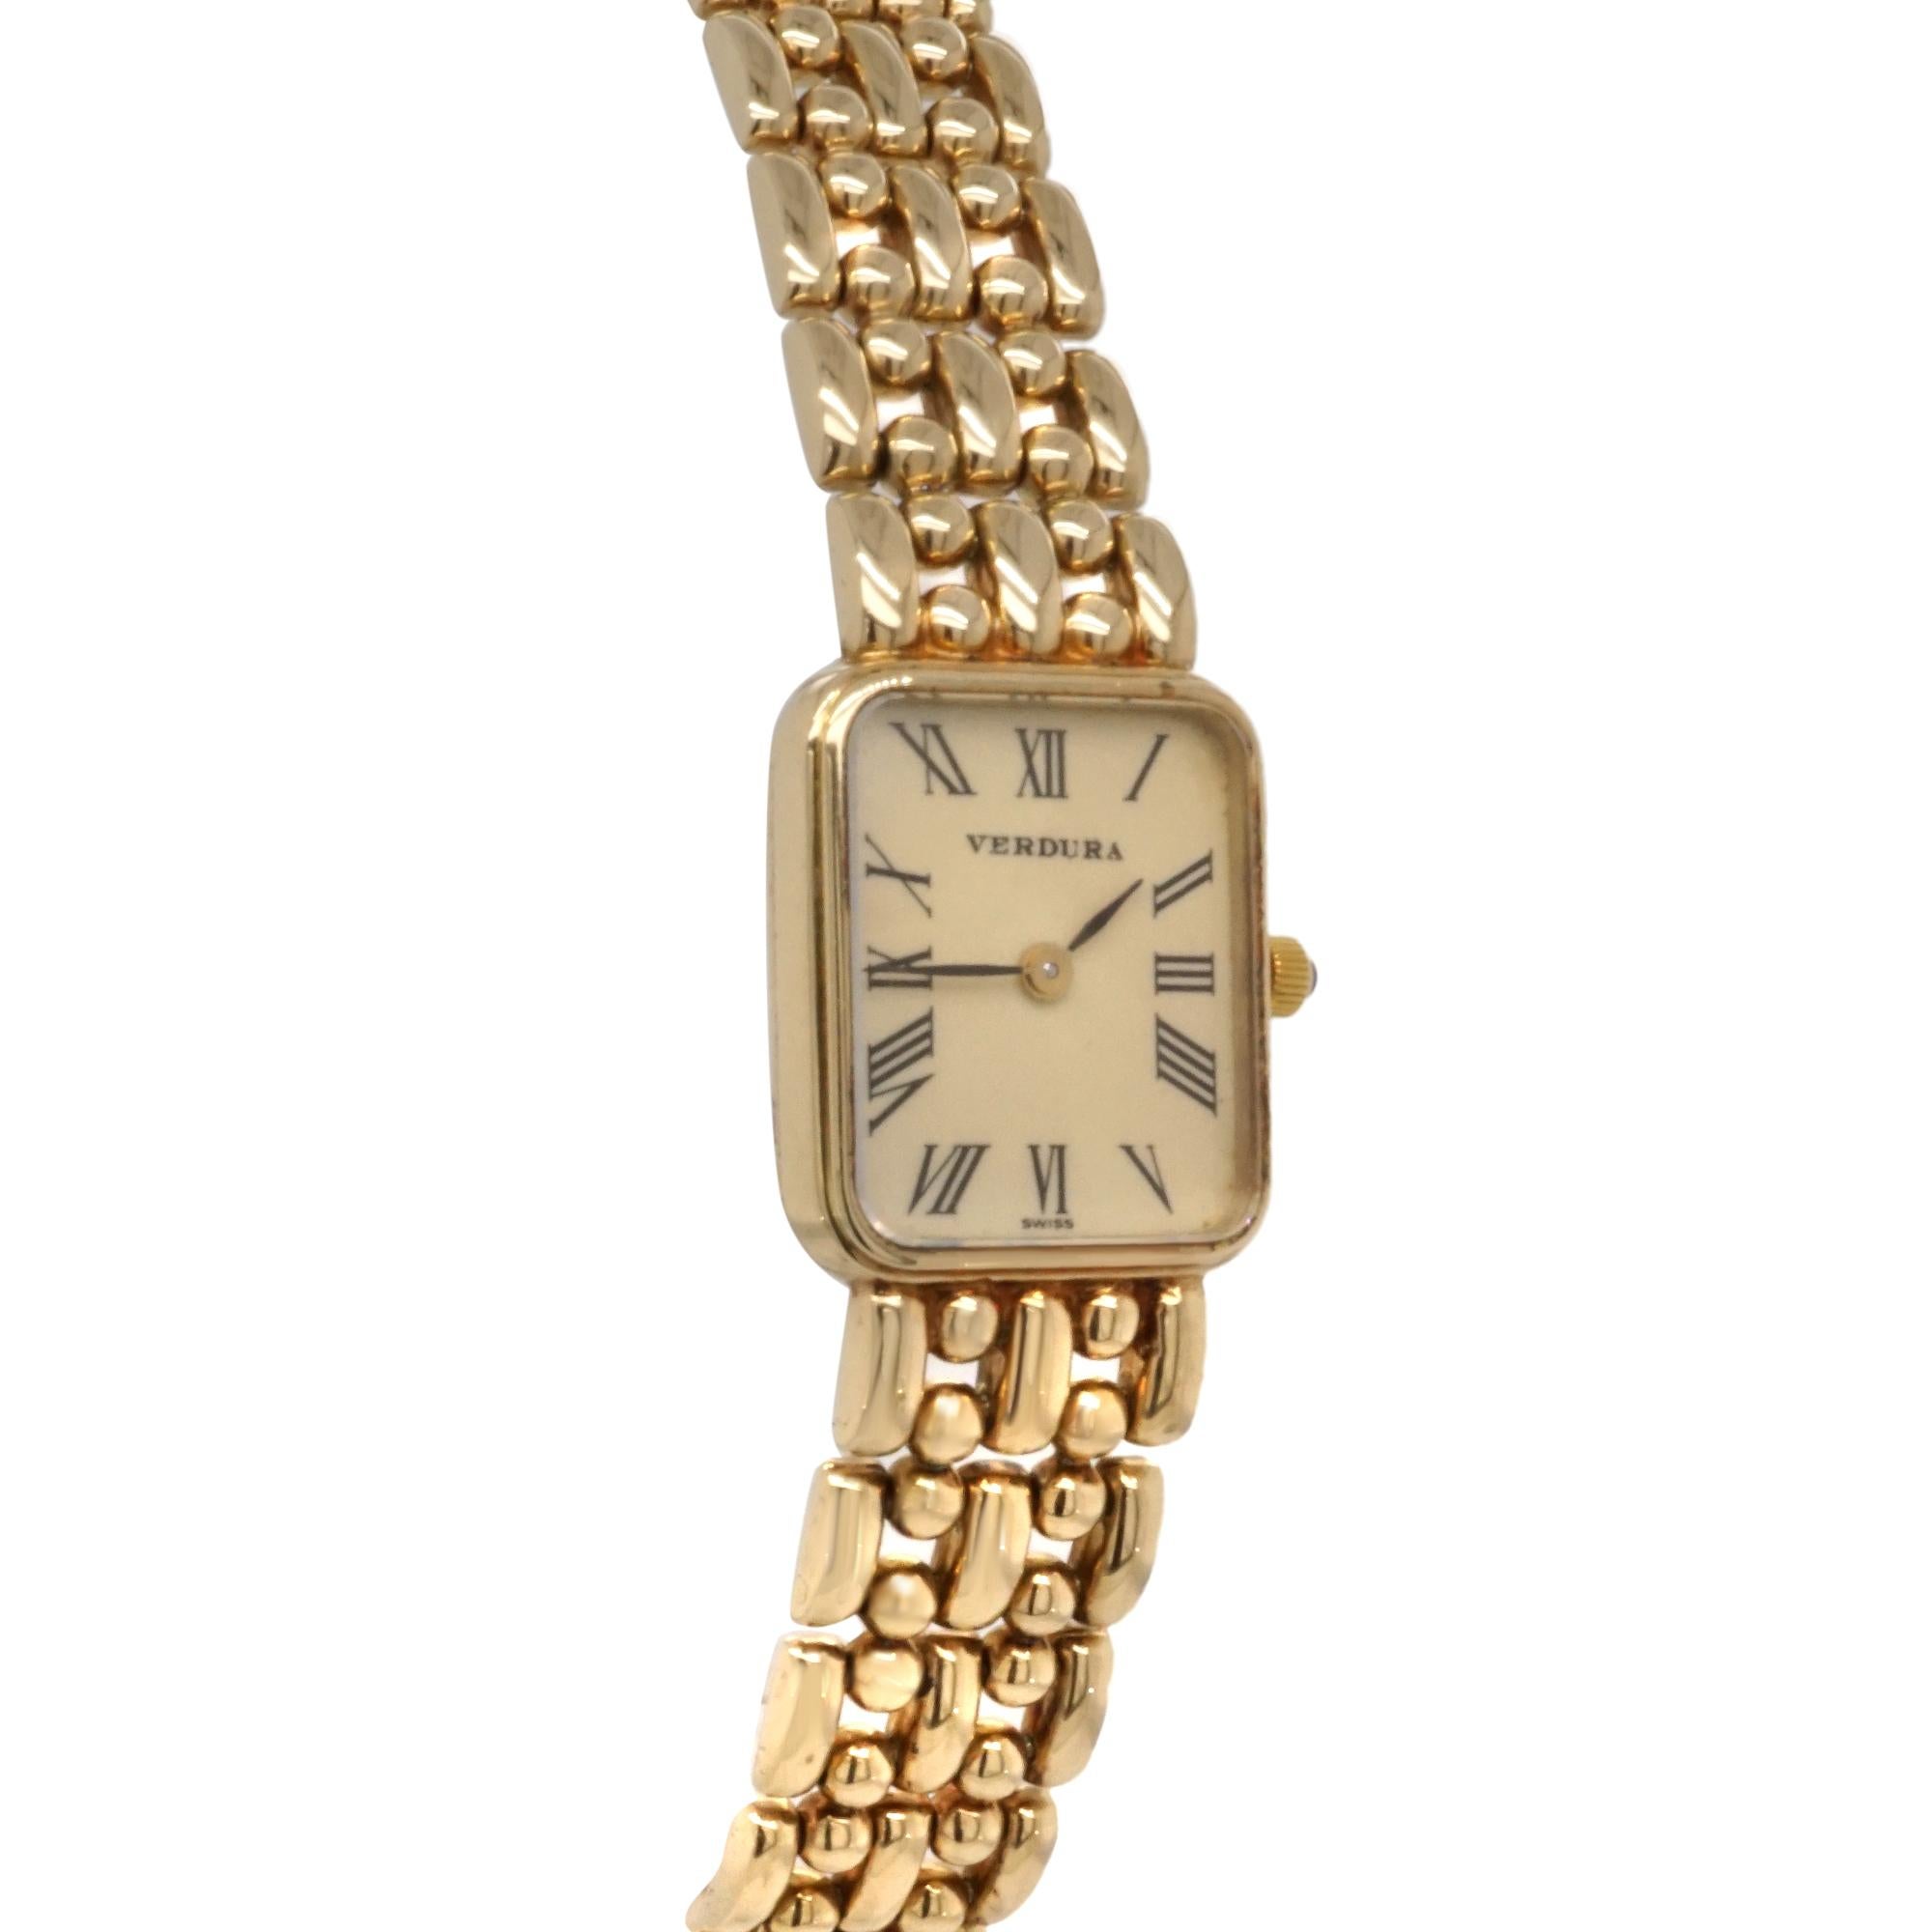 Verdura 14 Karat Yellow Gold Ladies Wristwatch with black roman numerals signed 